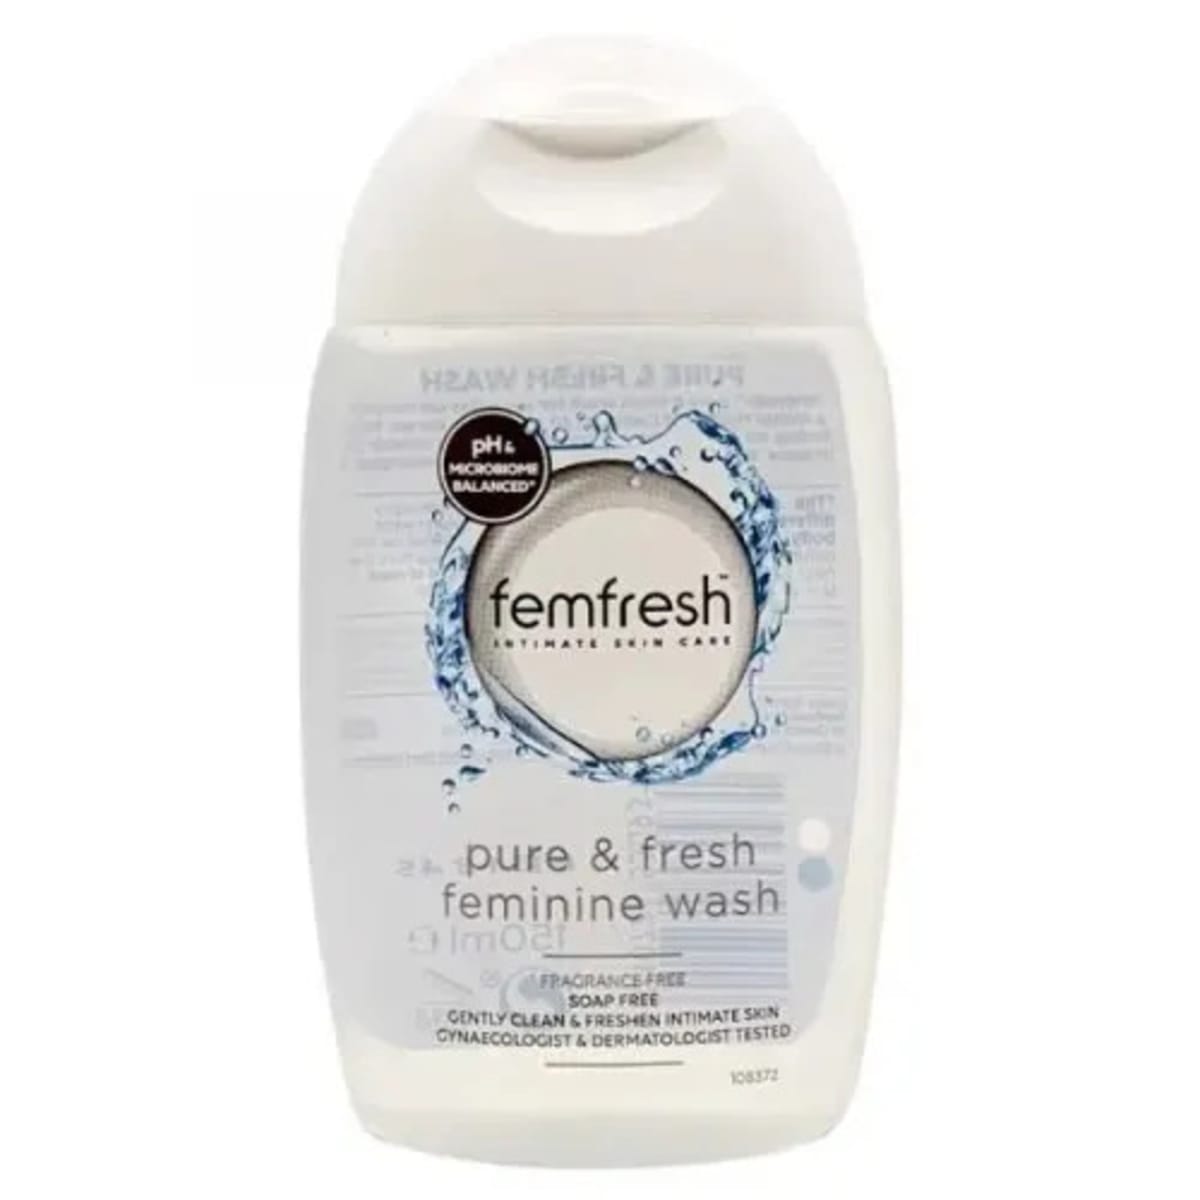 NEW Femfresh Sensitive Wash 250ml Fem Fresh Intimate Care PH Balanced